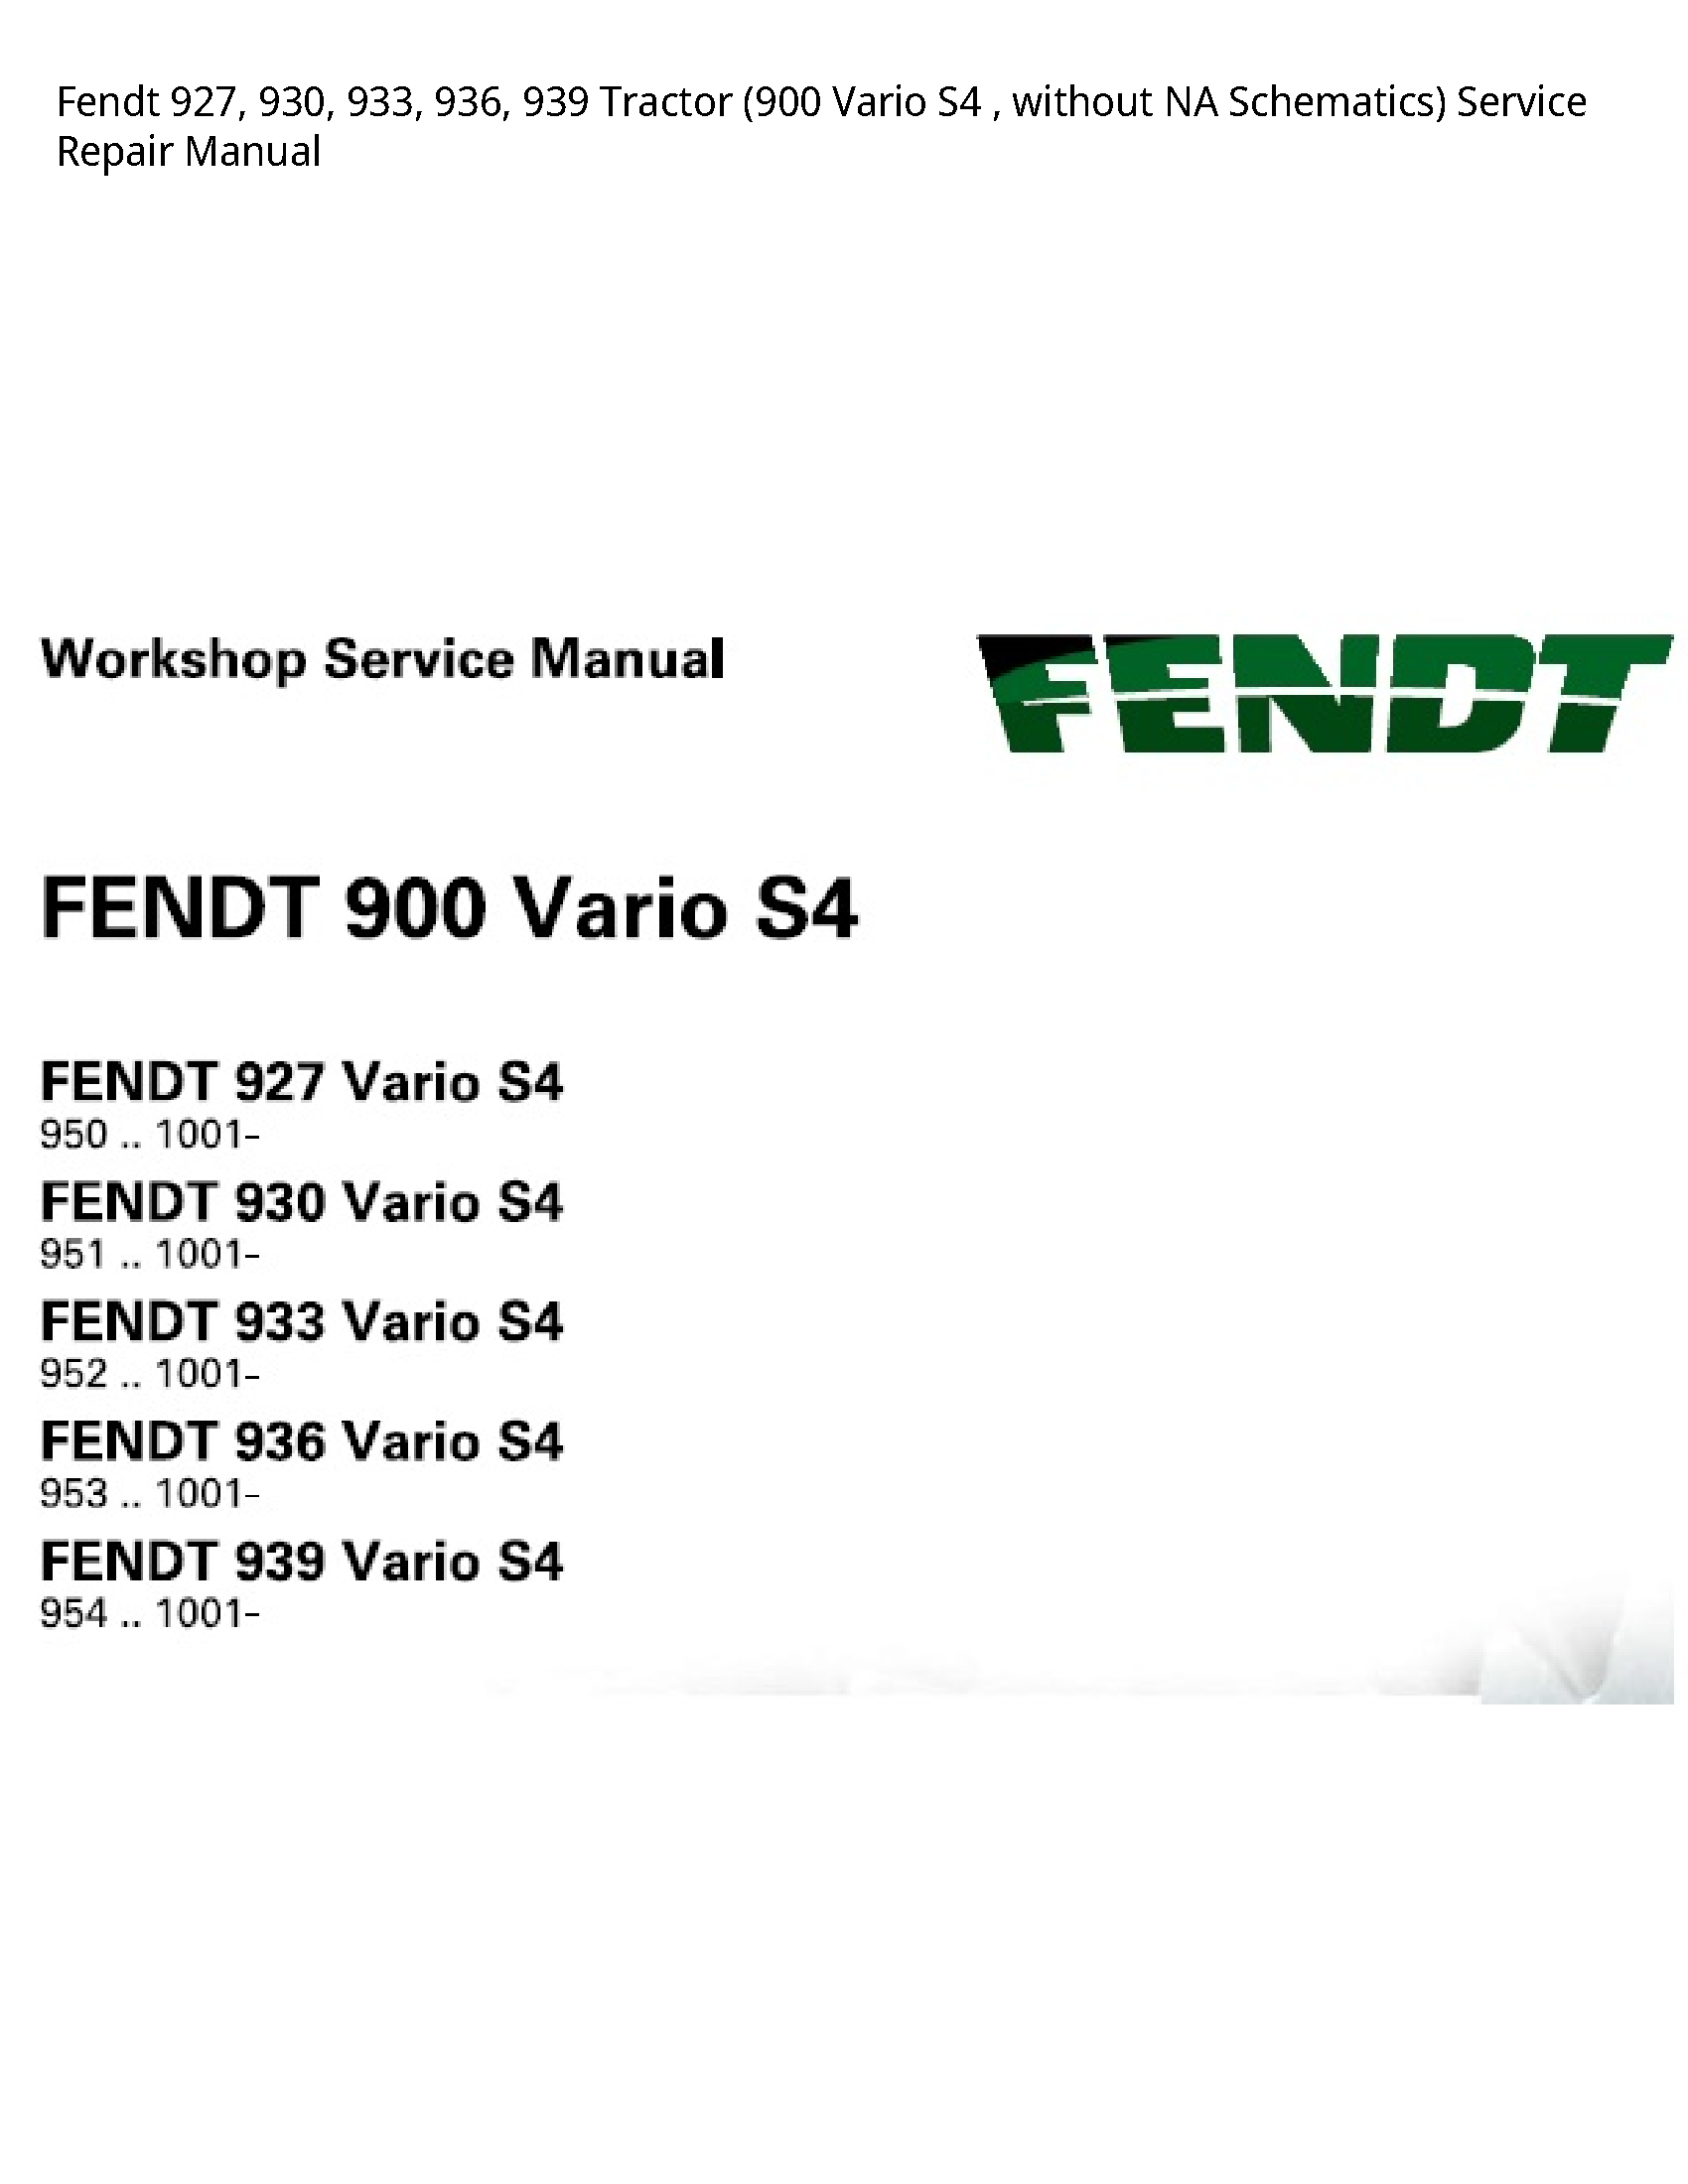 Fendt 927 Tractor Vario without NA Schematics) manual